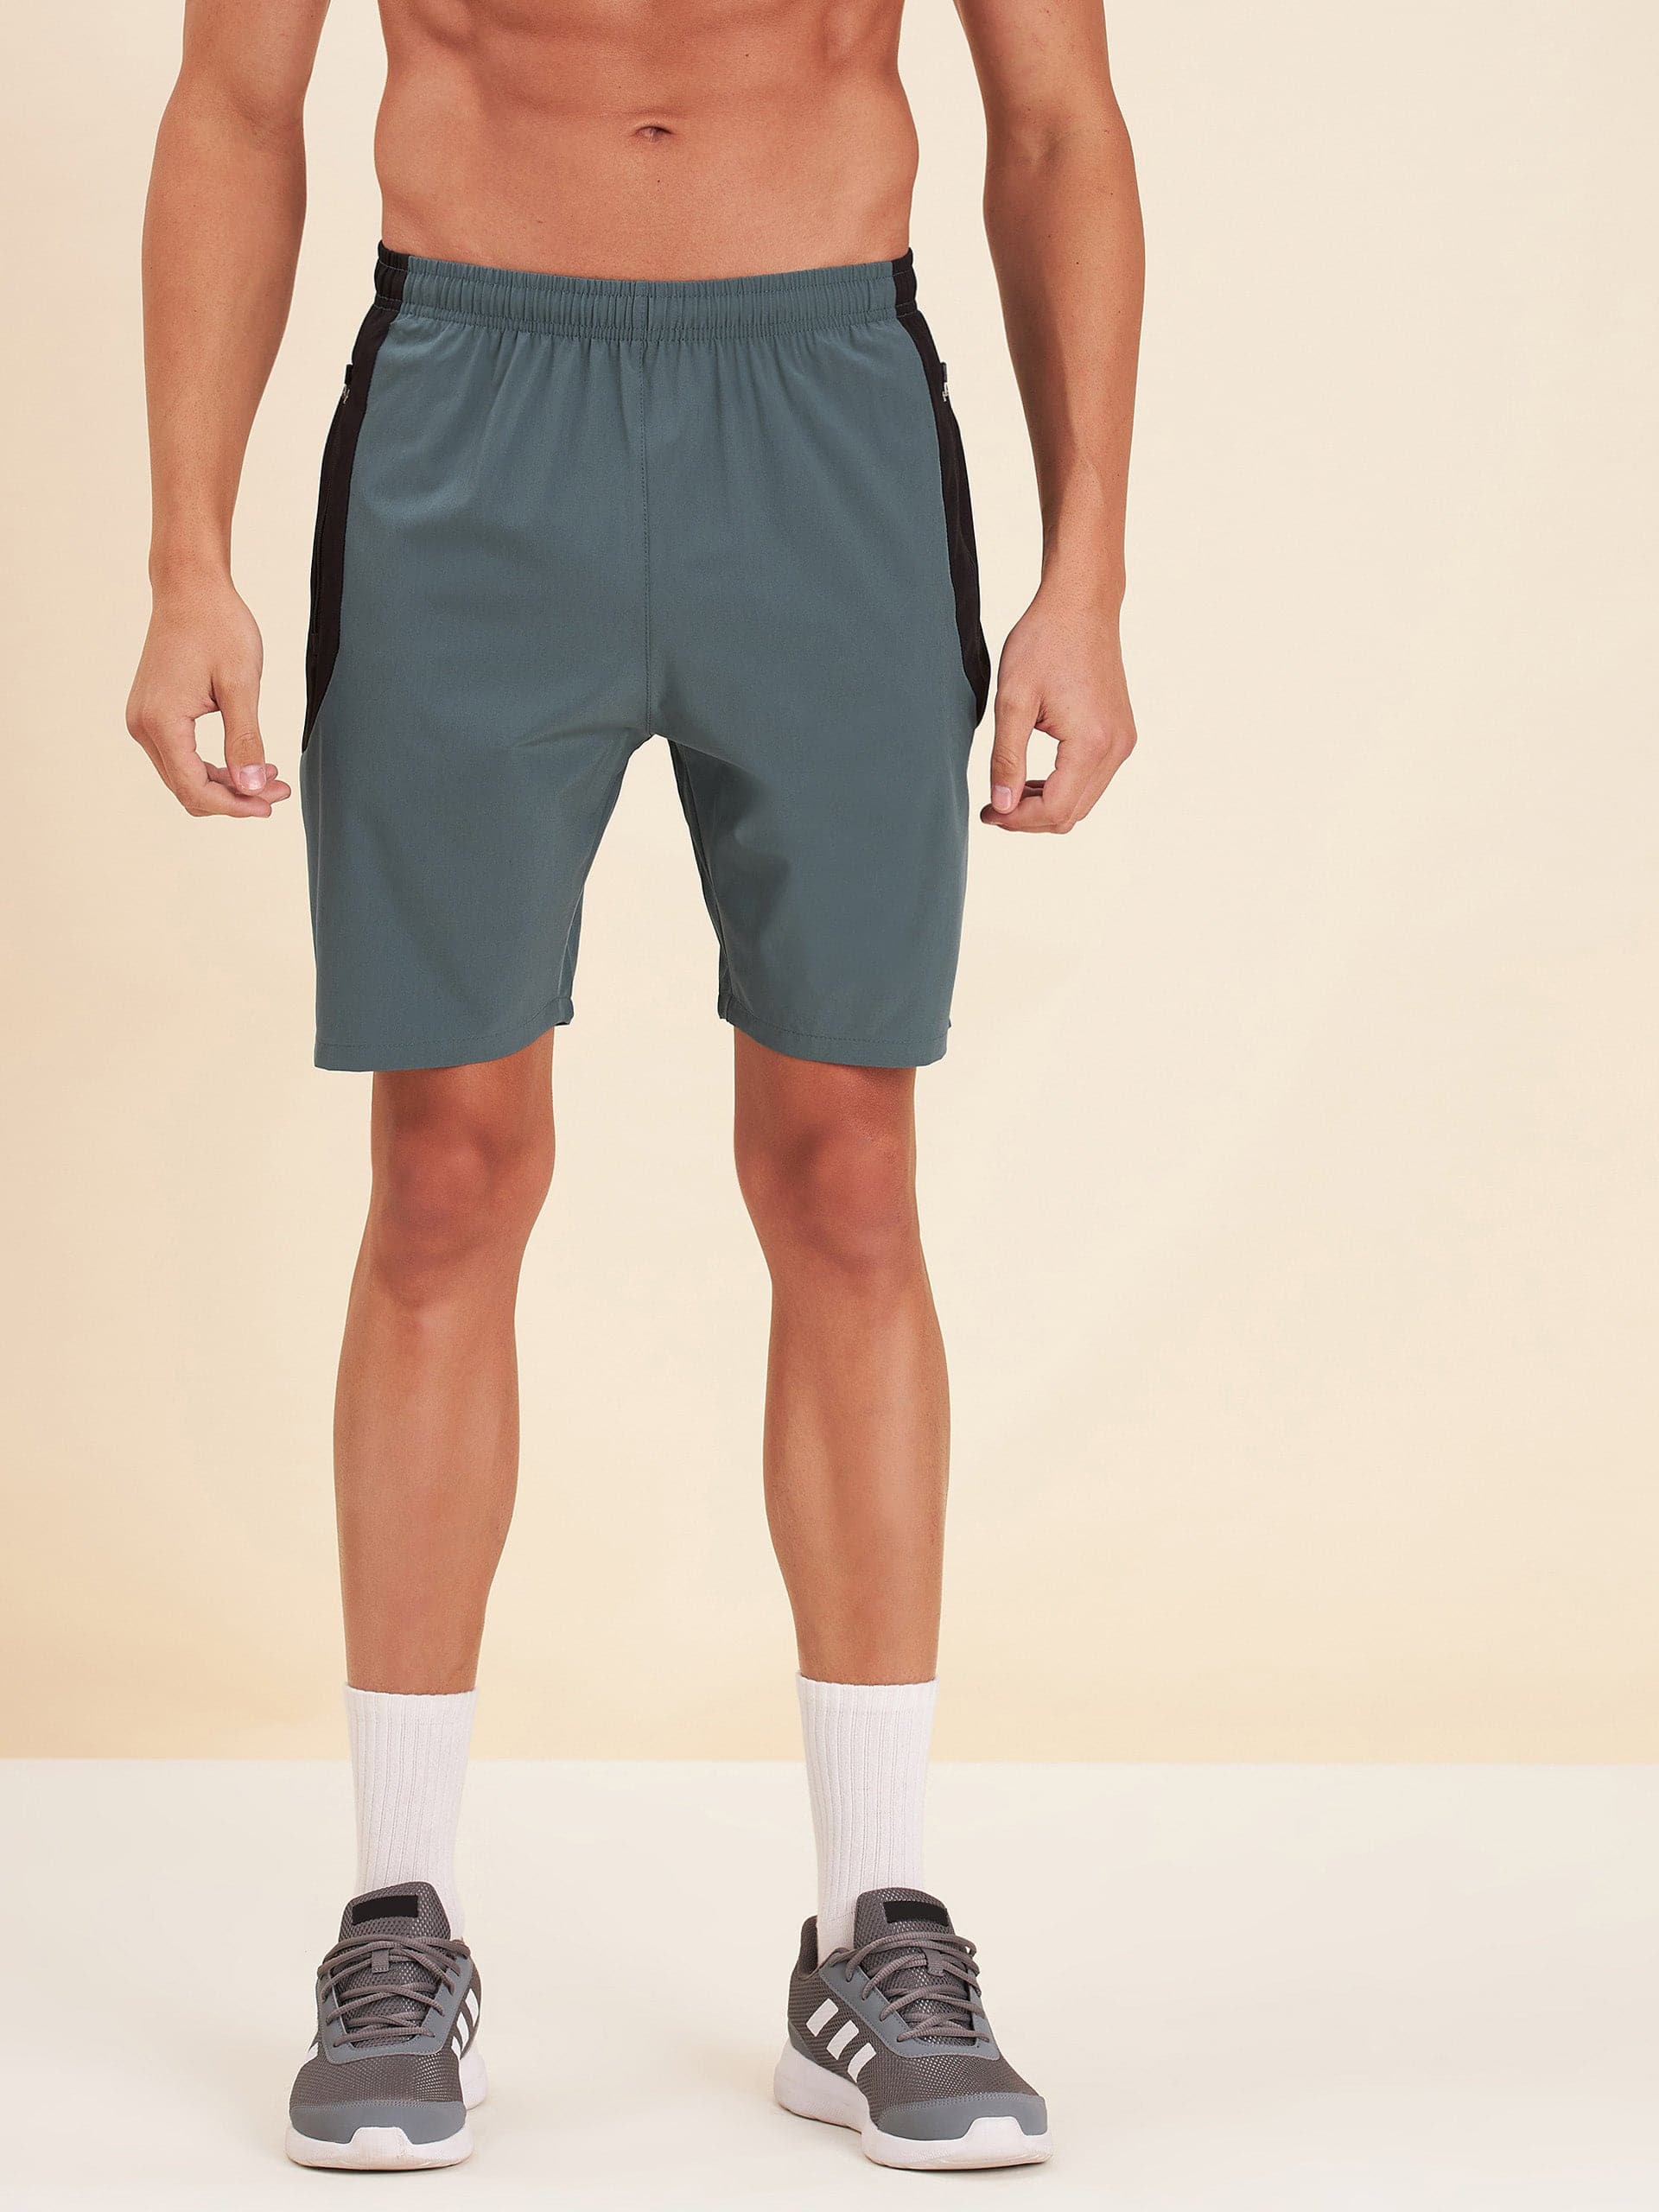 Men's Teal Blue & Black Dry Fit Shorts - LYUSH-MASCLN